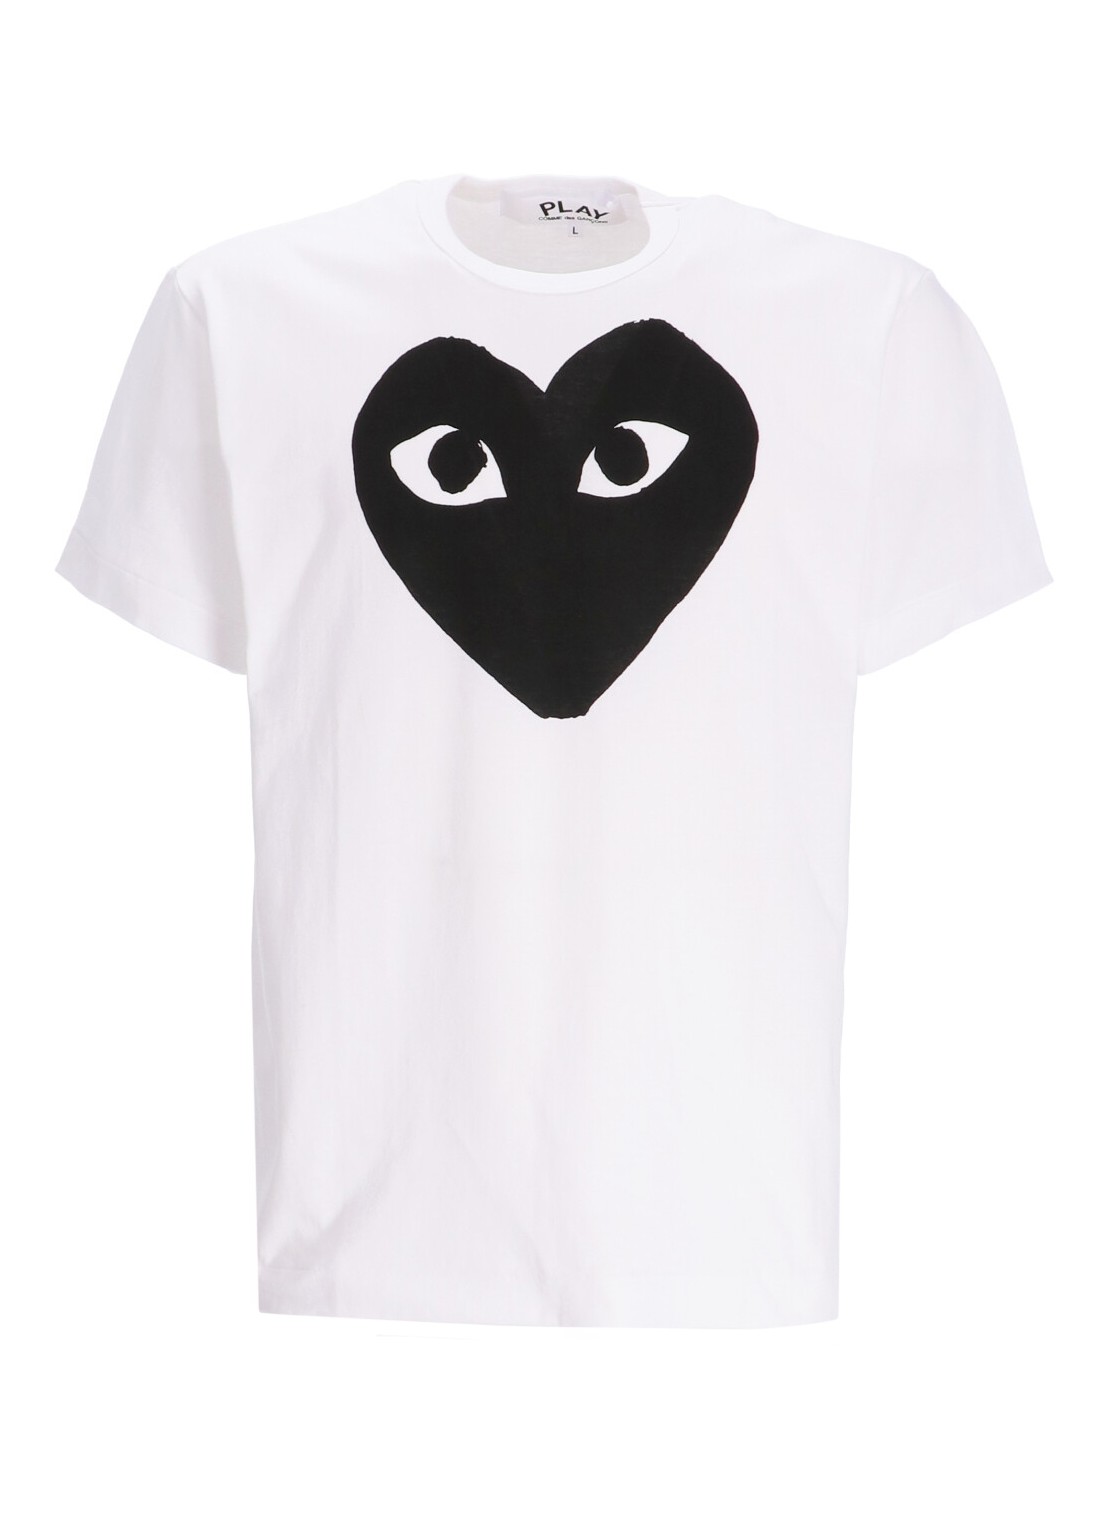 Camiseta comme des garcons t-shirt man play t-shirt men - black heart axt070051 white black talla bl